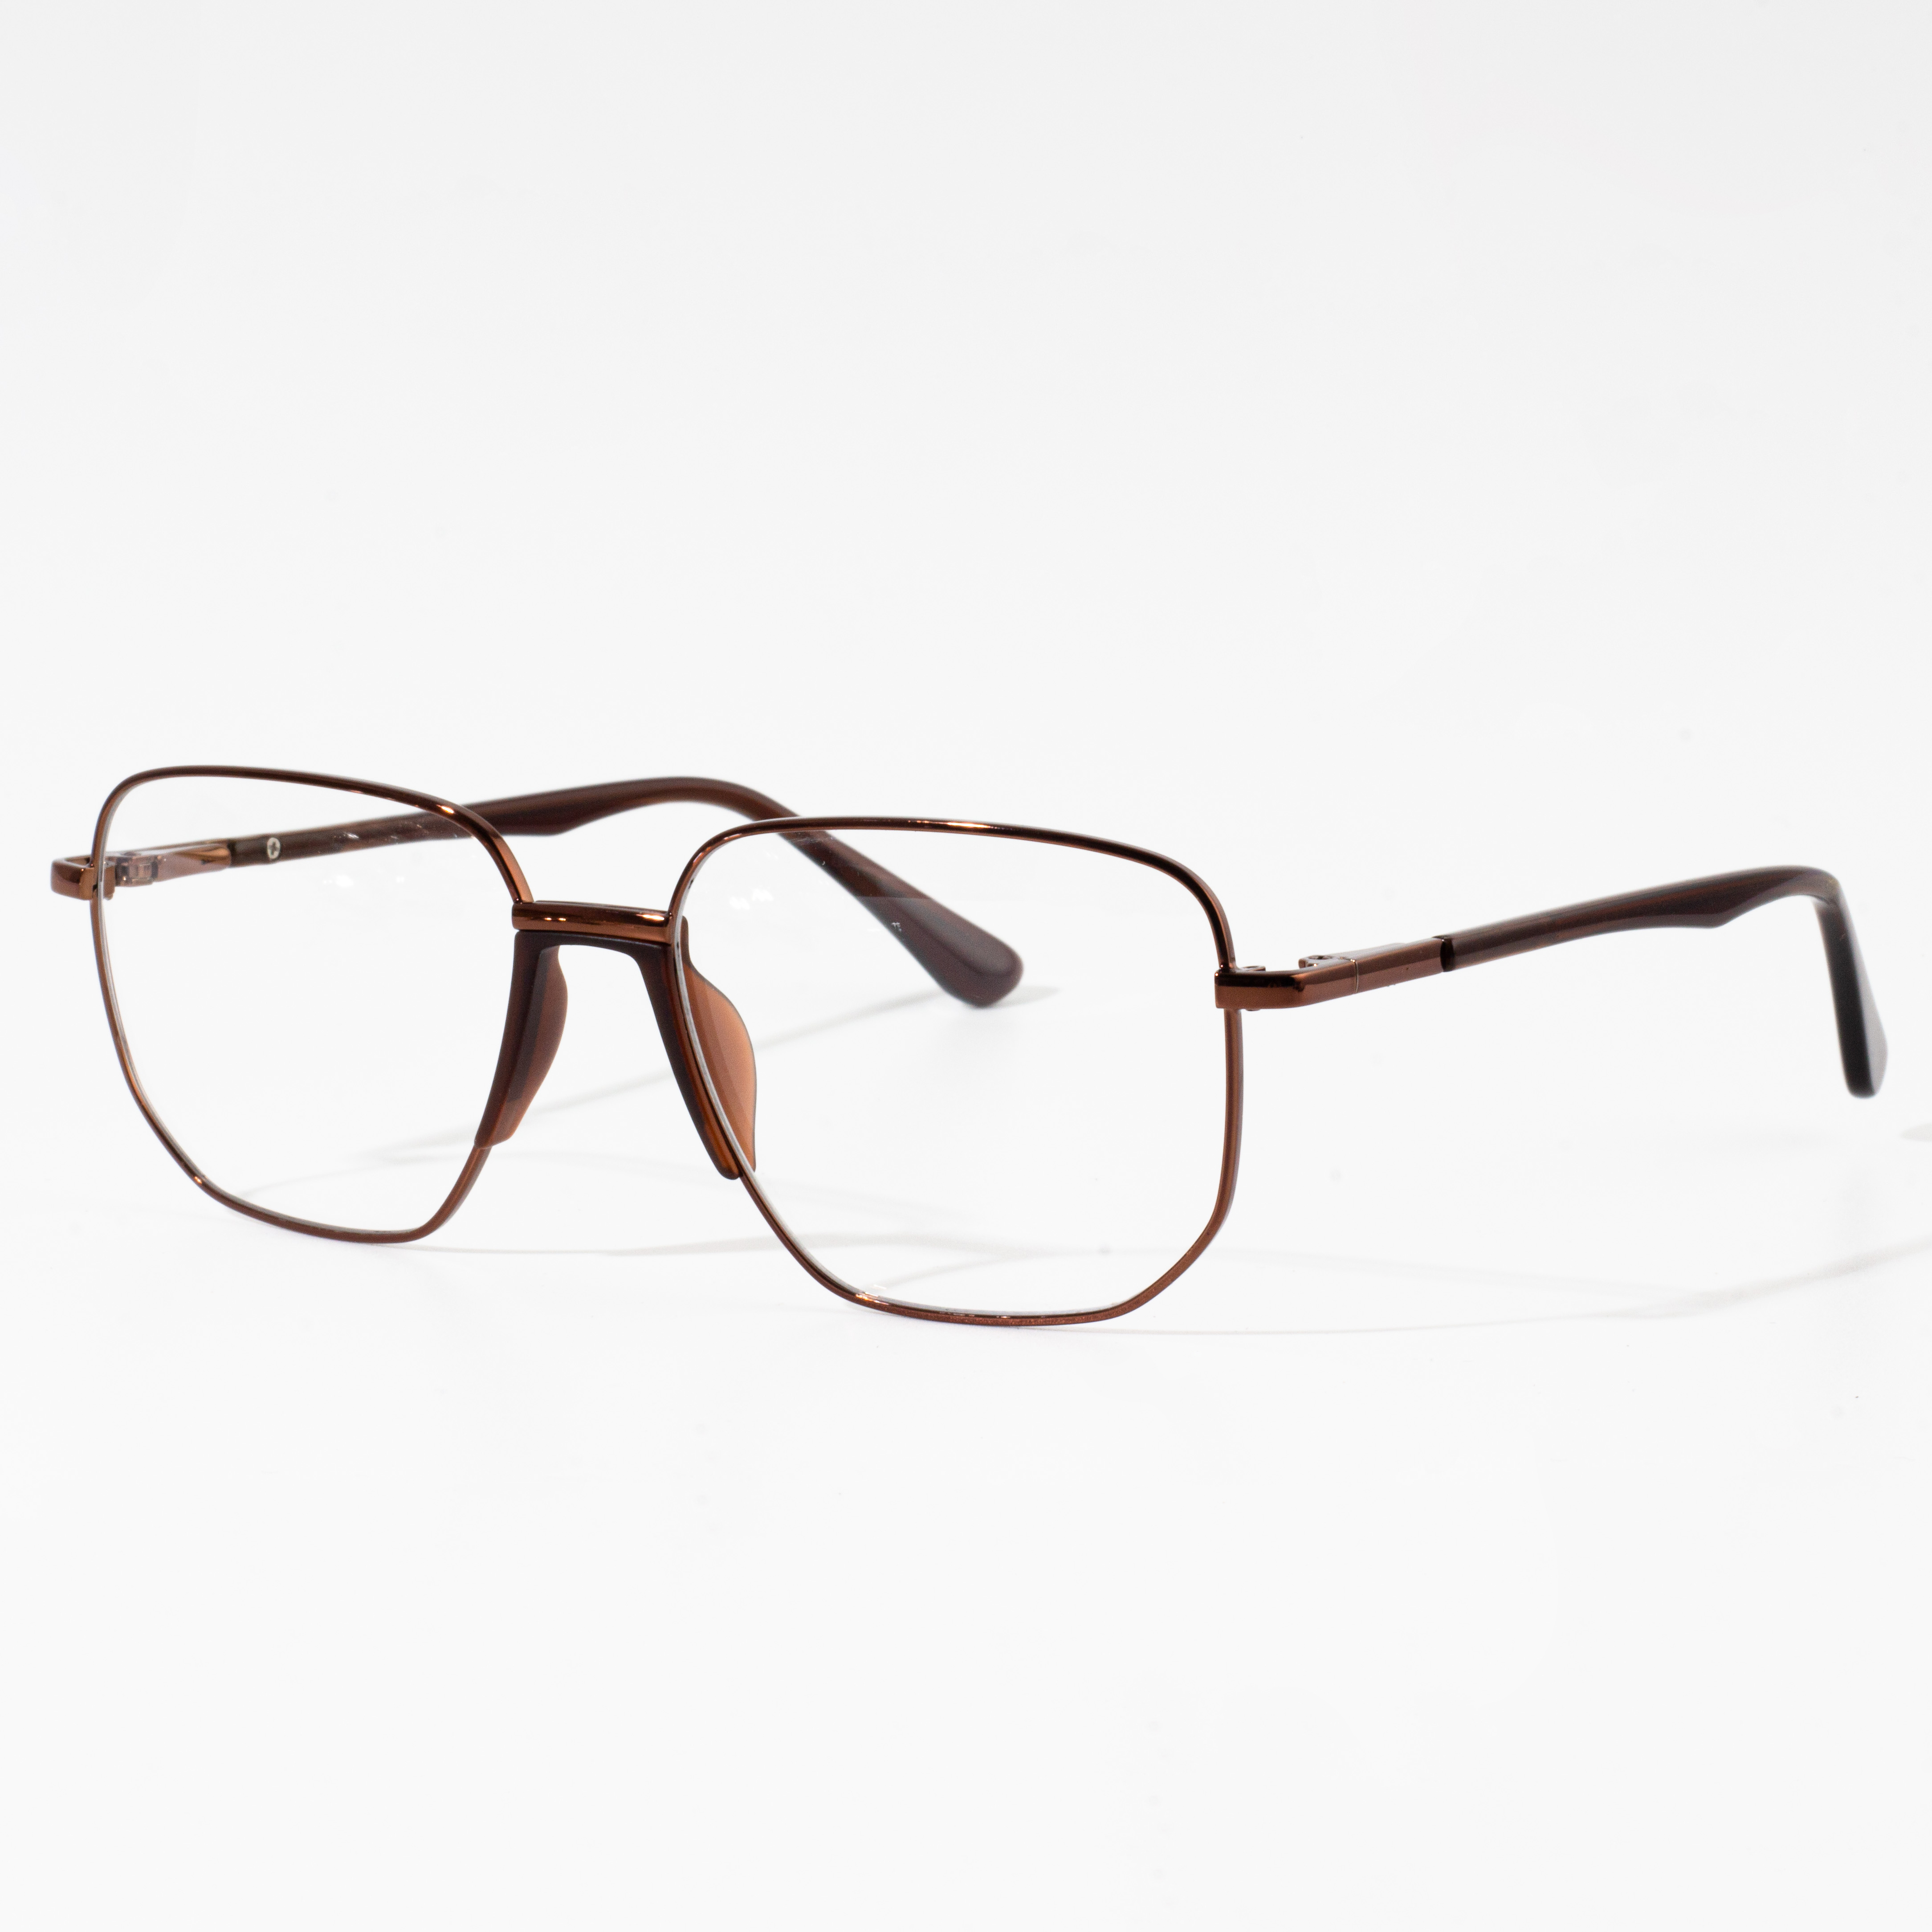 Titanium Glasses Frame (8)